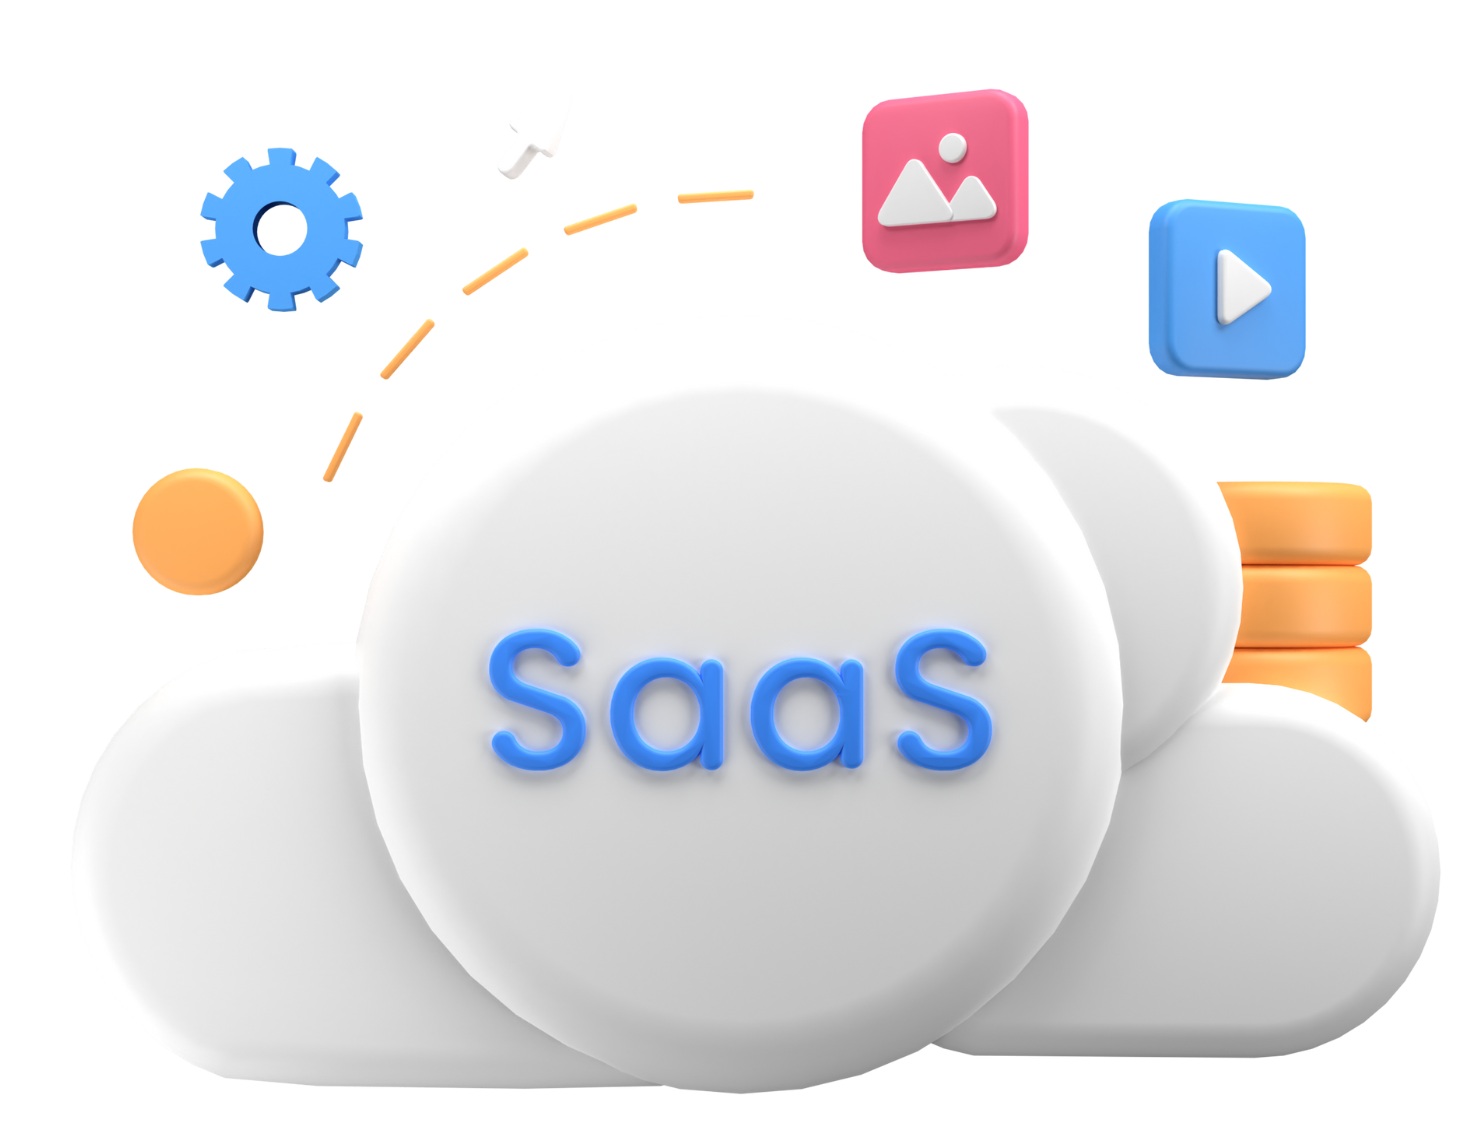 A SaaS Cloud service